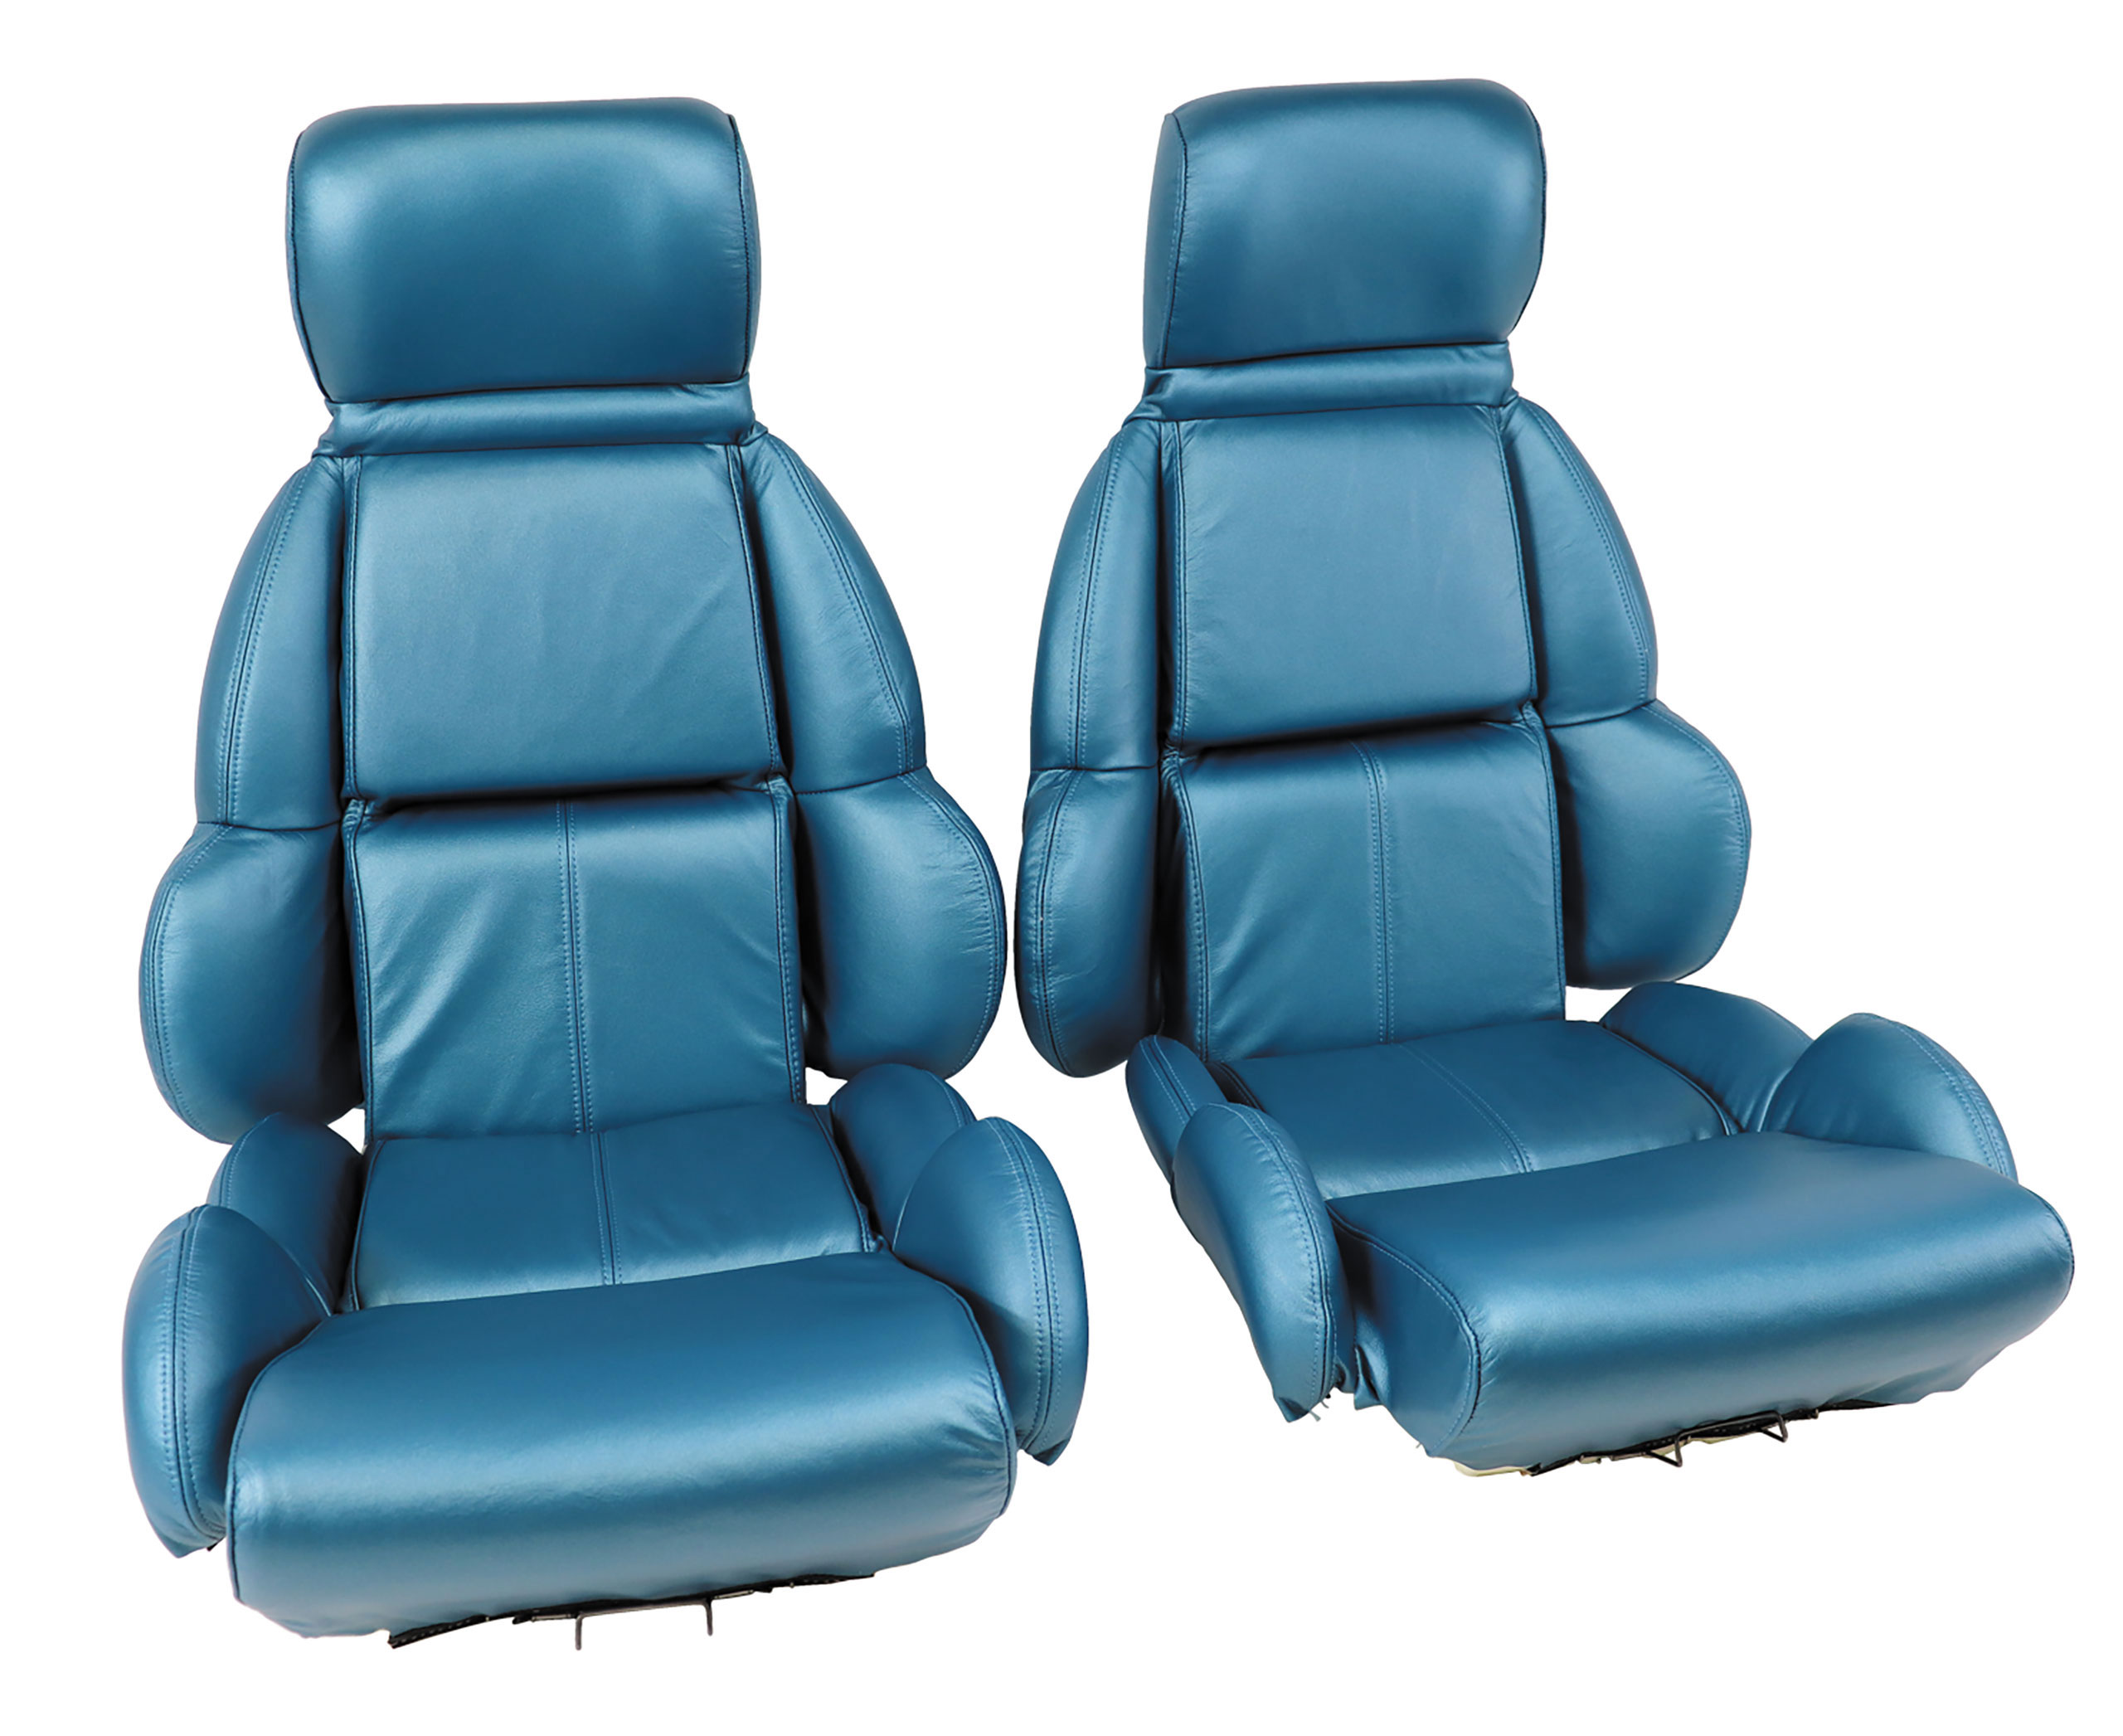 1989 Corvette C4 Leather Seat Covers- Blue Standard CA-420474 